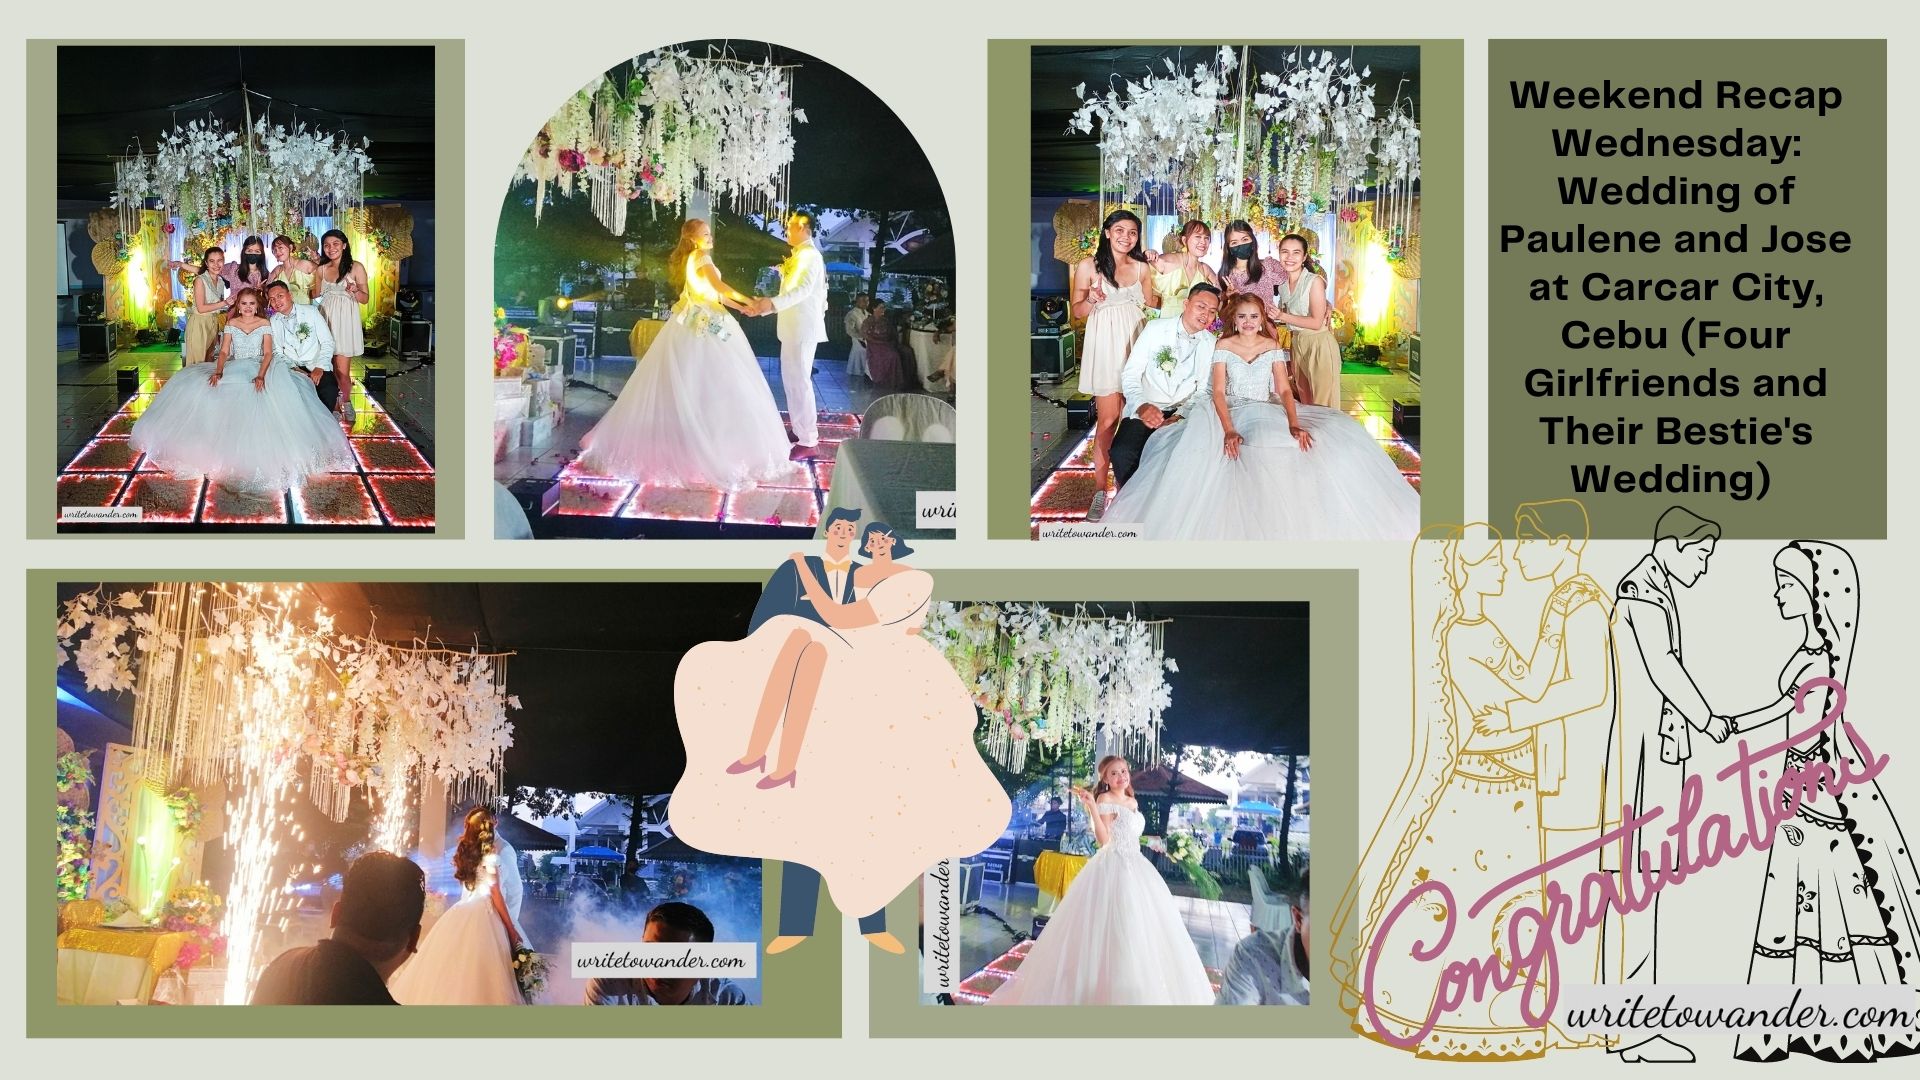 Weekend Recap Wednesday Wedding of Paulene and Jose at Carcar City, Cebu Four Girlfriends and Their Bestie's Wedding.jpg